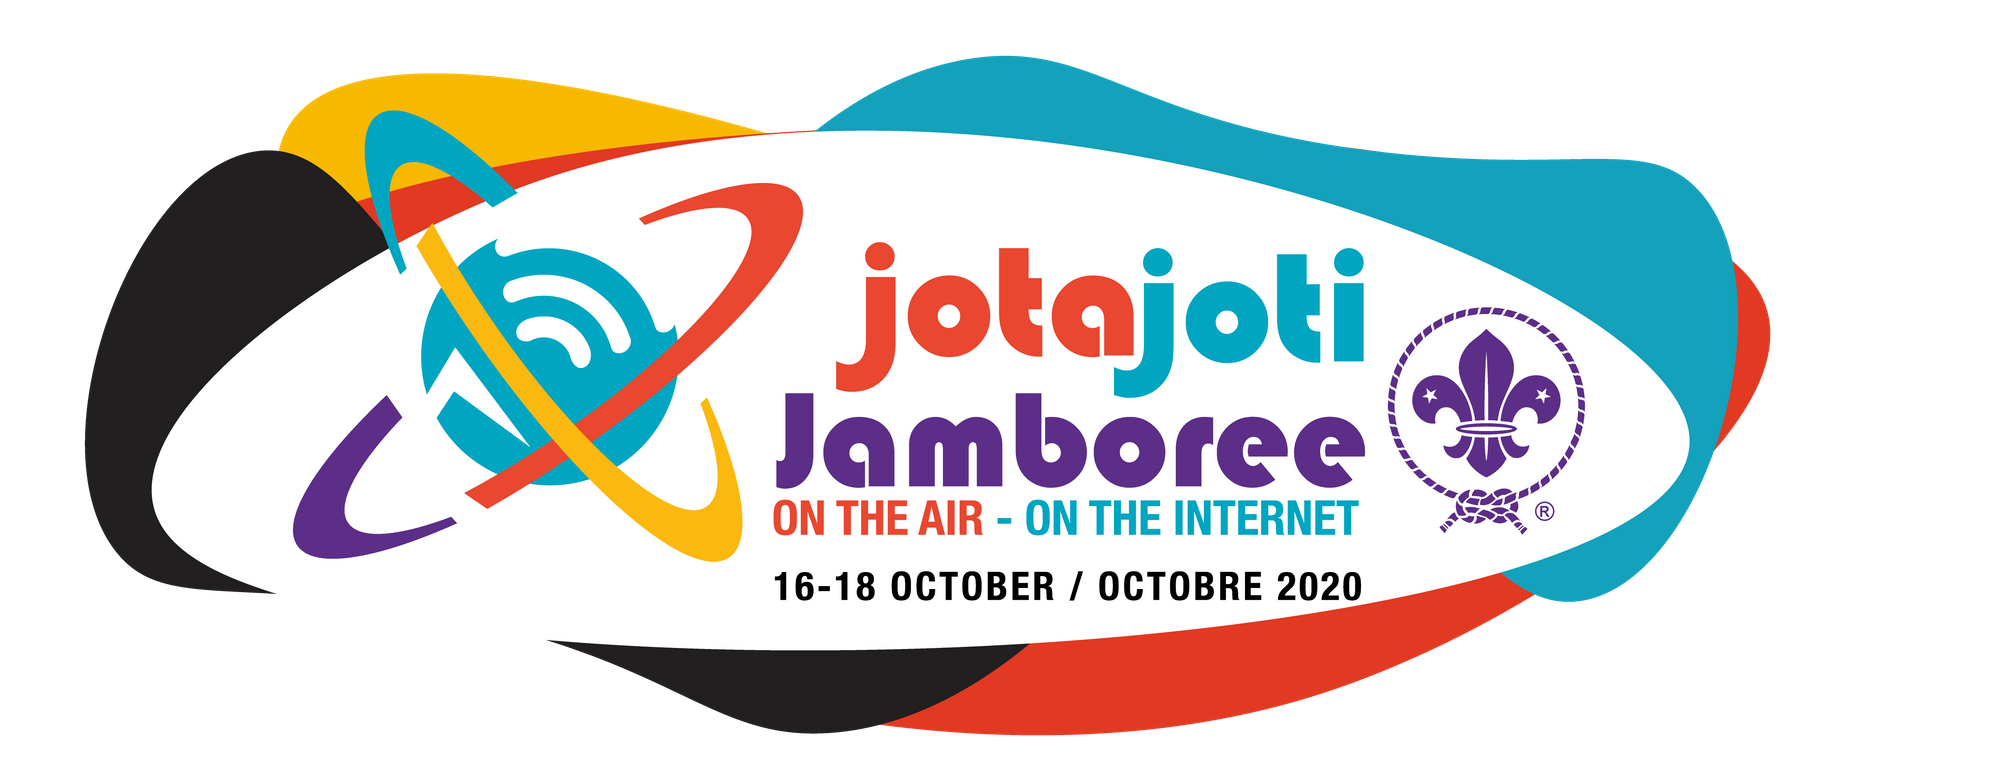 JOTA-JOTI 2020